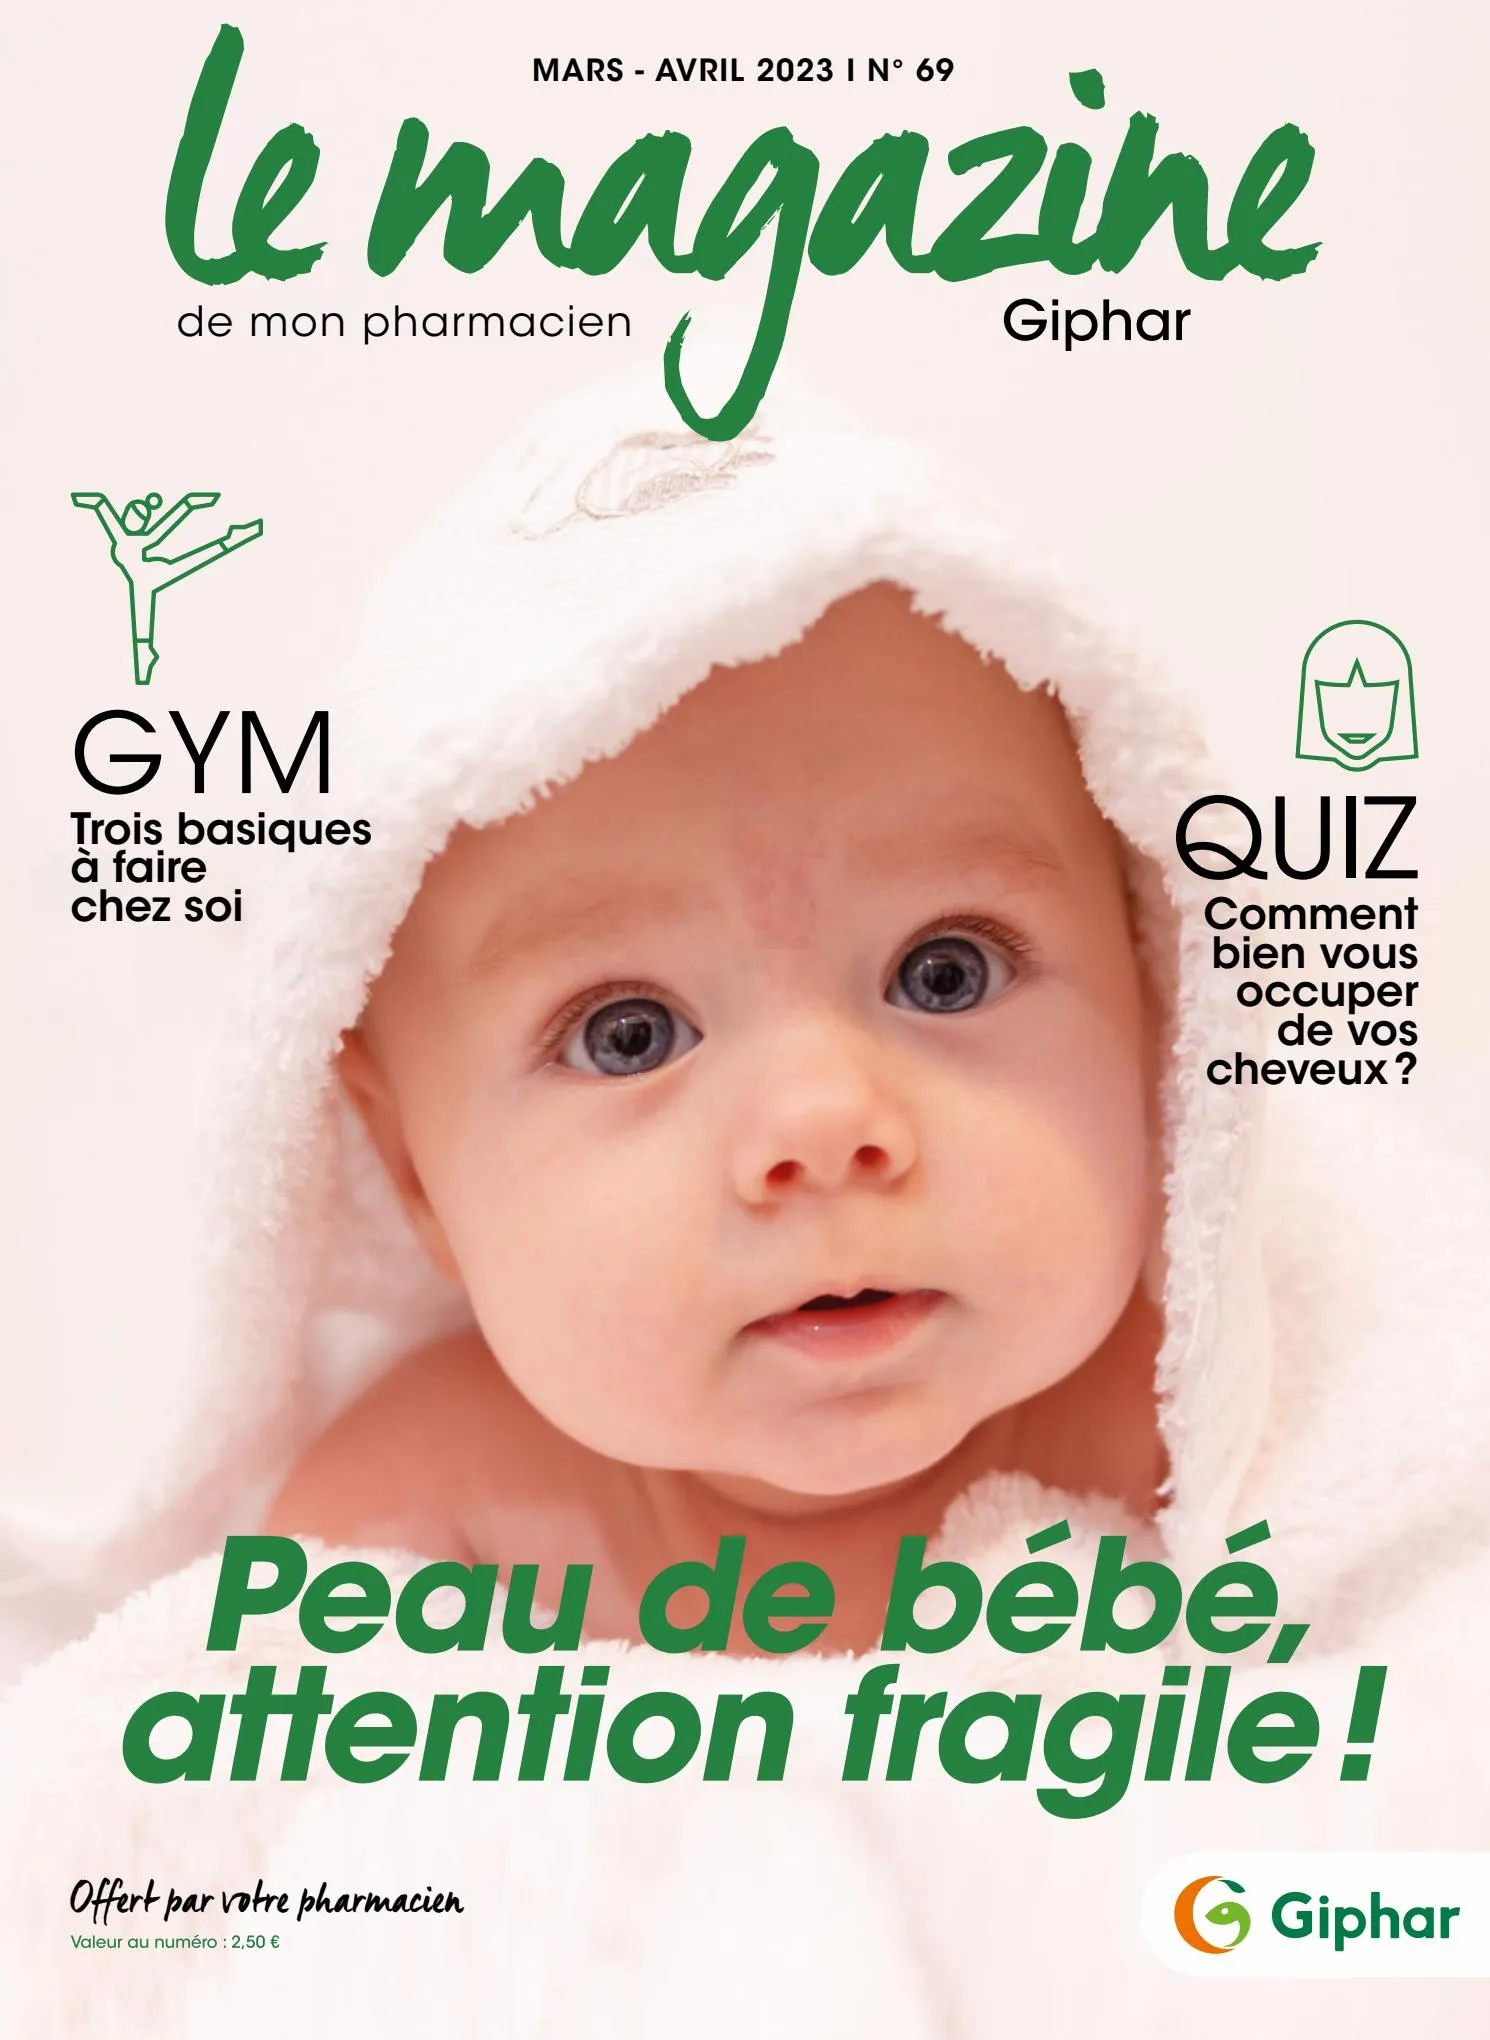 Catalogue Pharmacien Giphar Magazine Mars-Avril 2023, page 00001